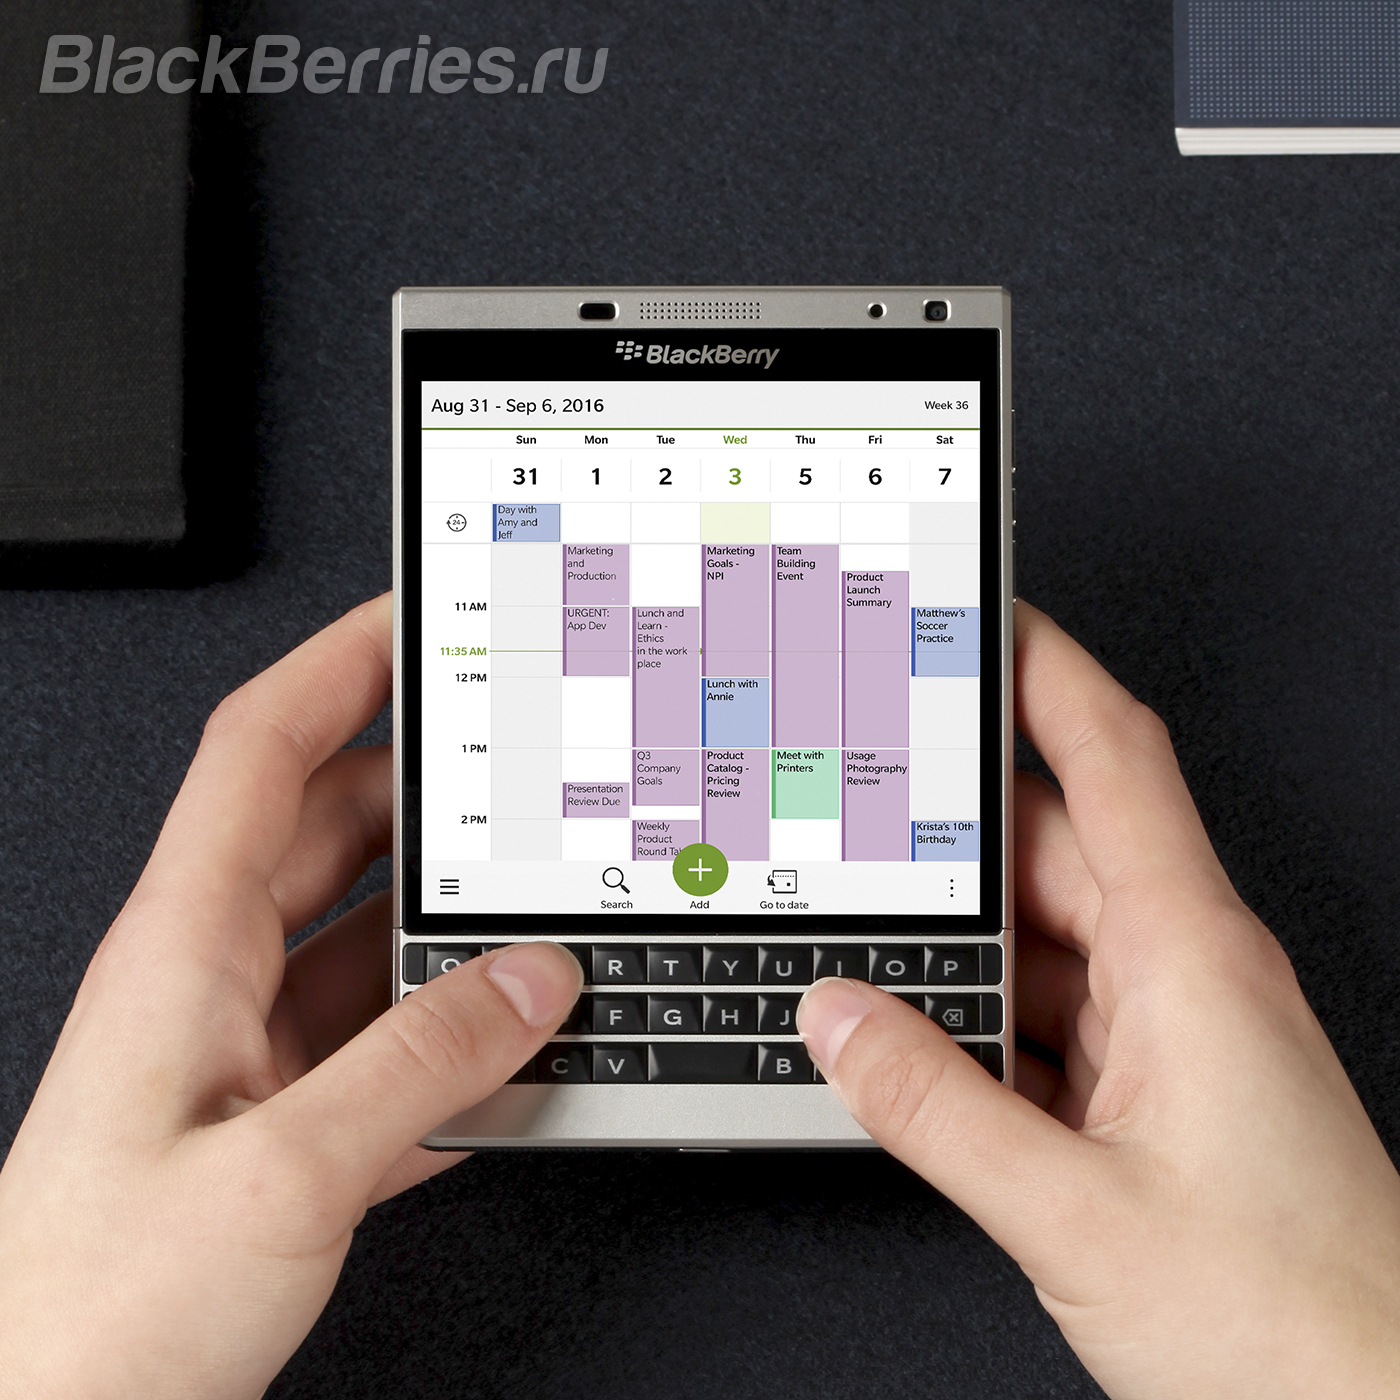 BlackBerry-Passport-Silver-Edition-1